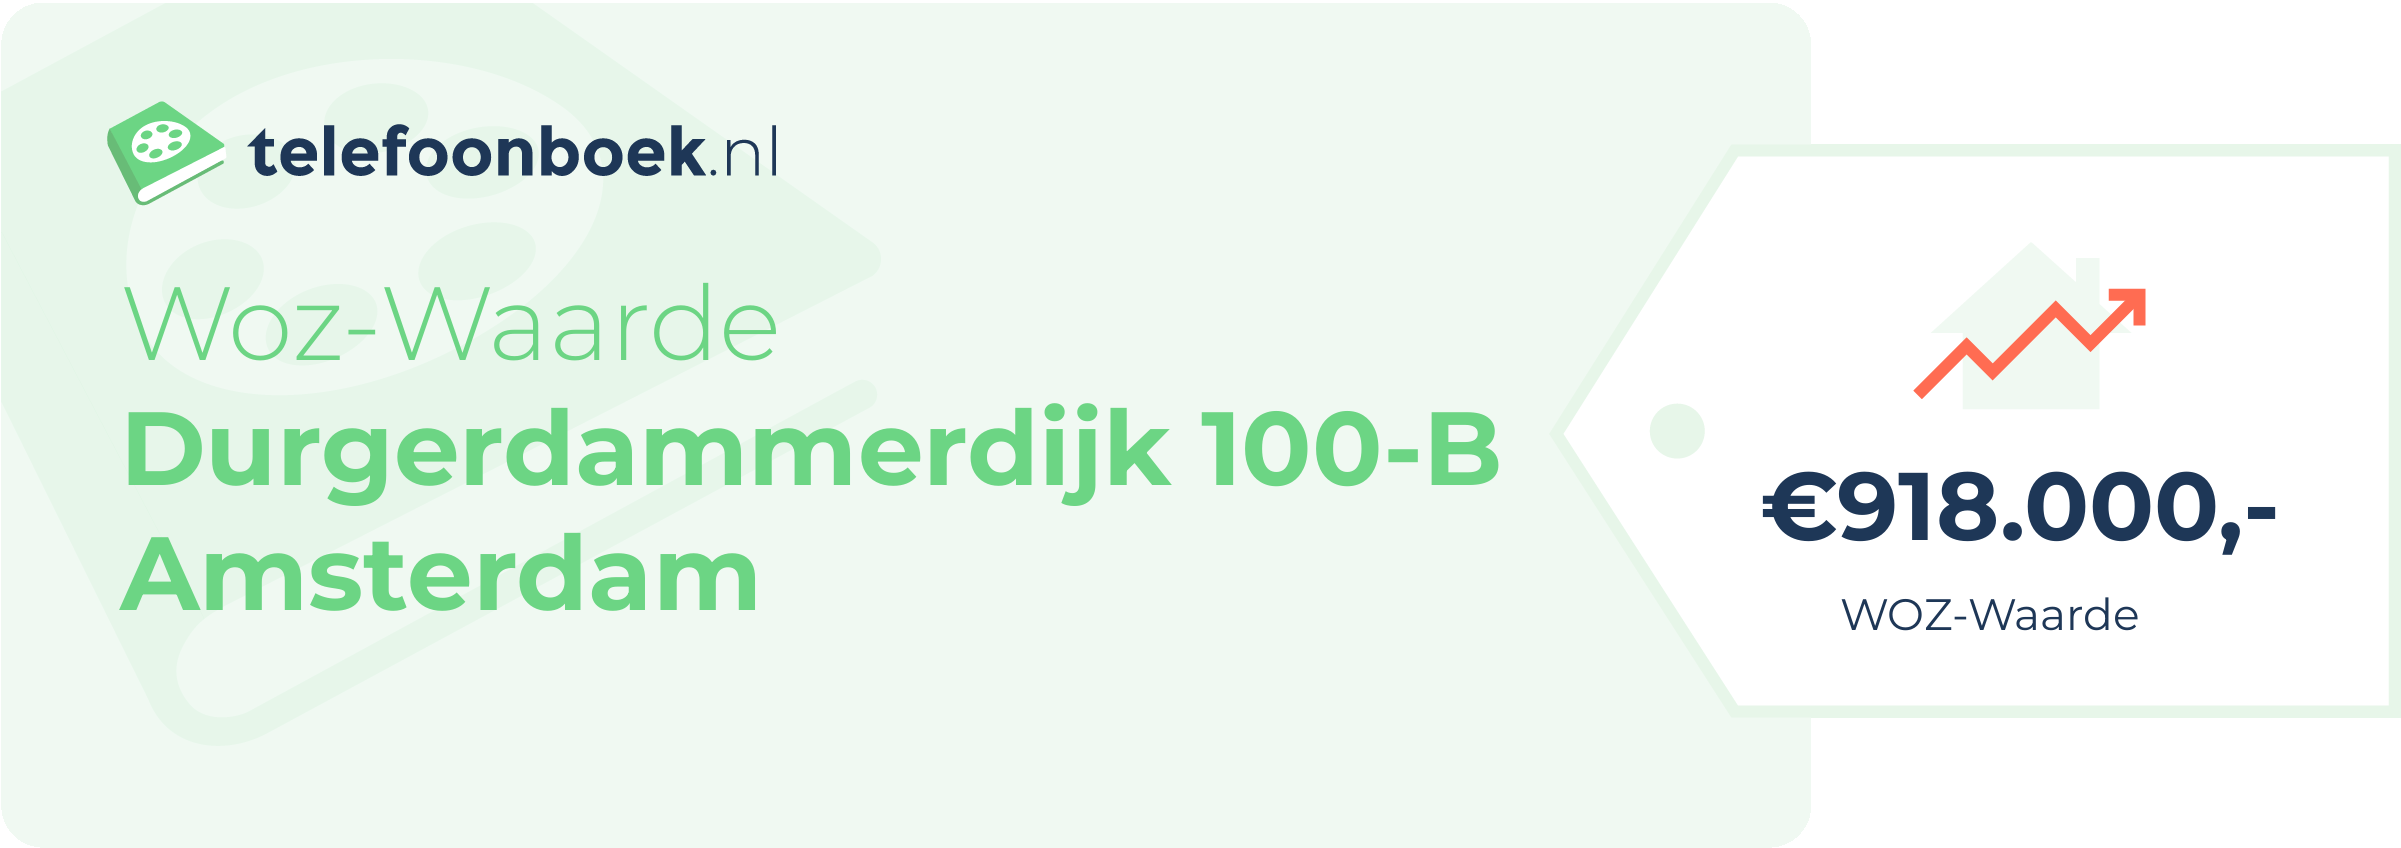 WOZ-waarde Durgerdammerdijk 100-B Amsterdam